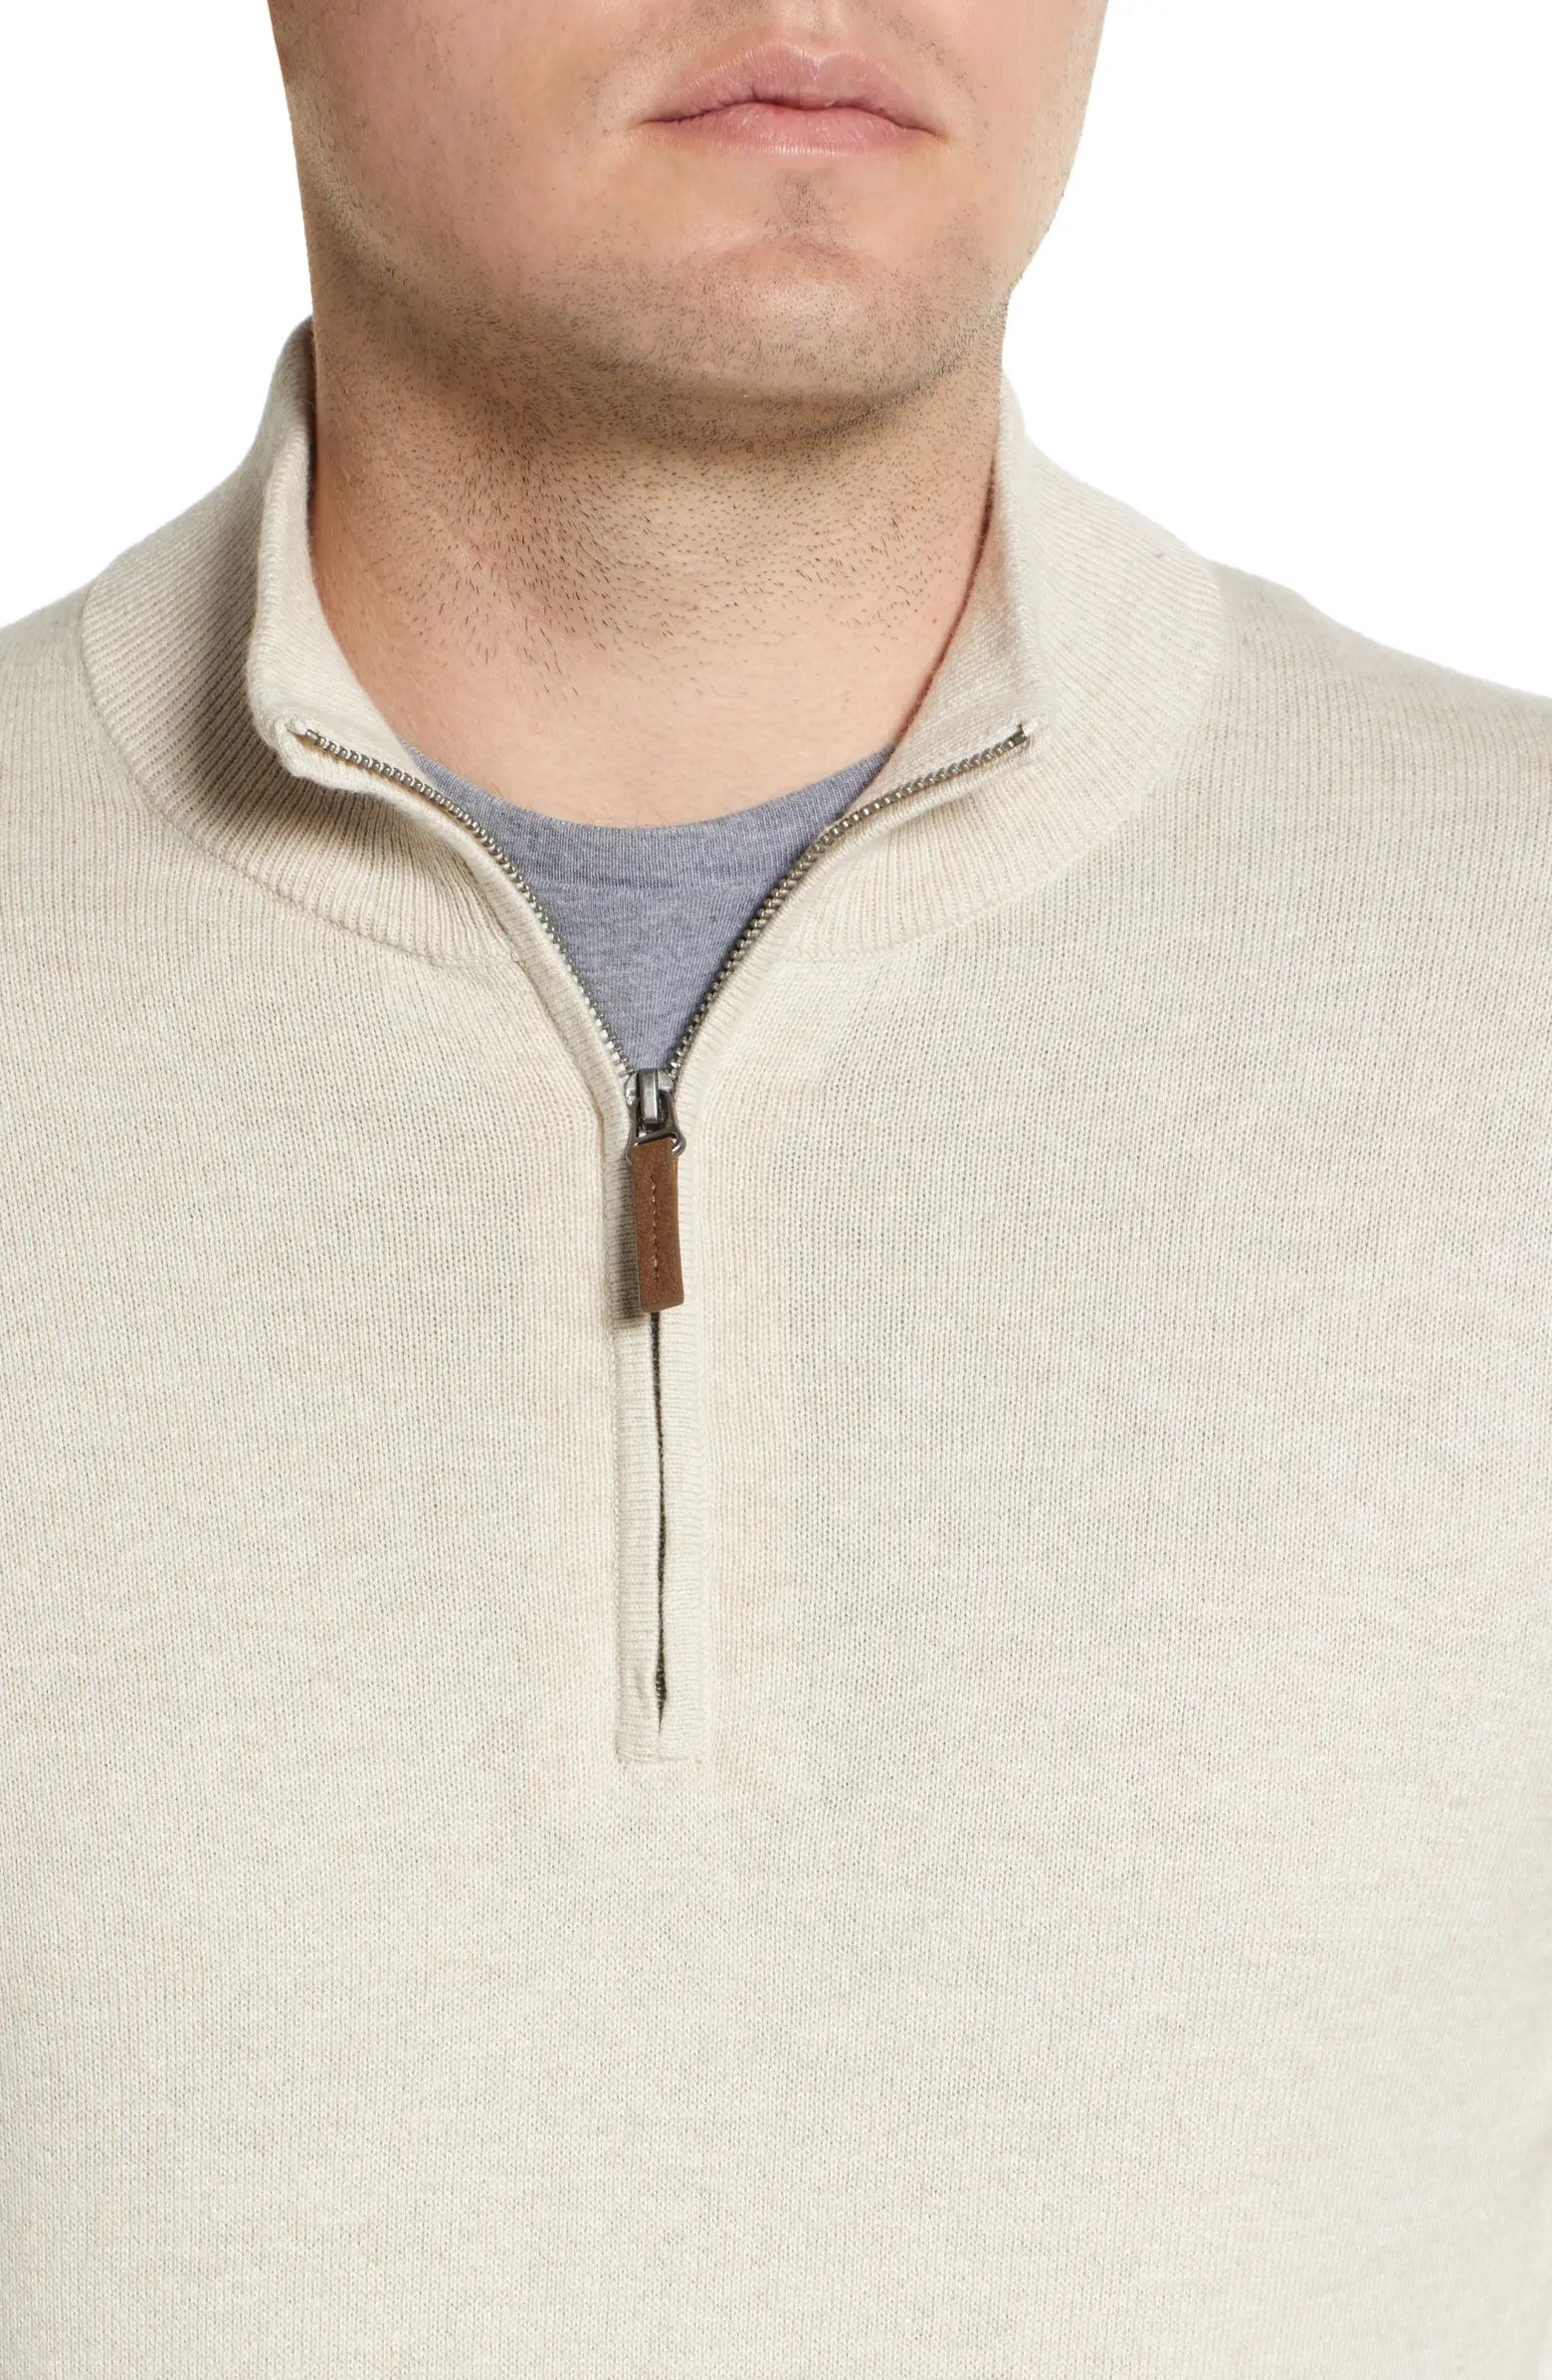 Half Zip Cotton & Cashmere Pullover Sweater | Nordstrom